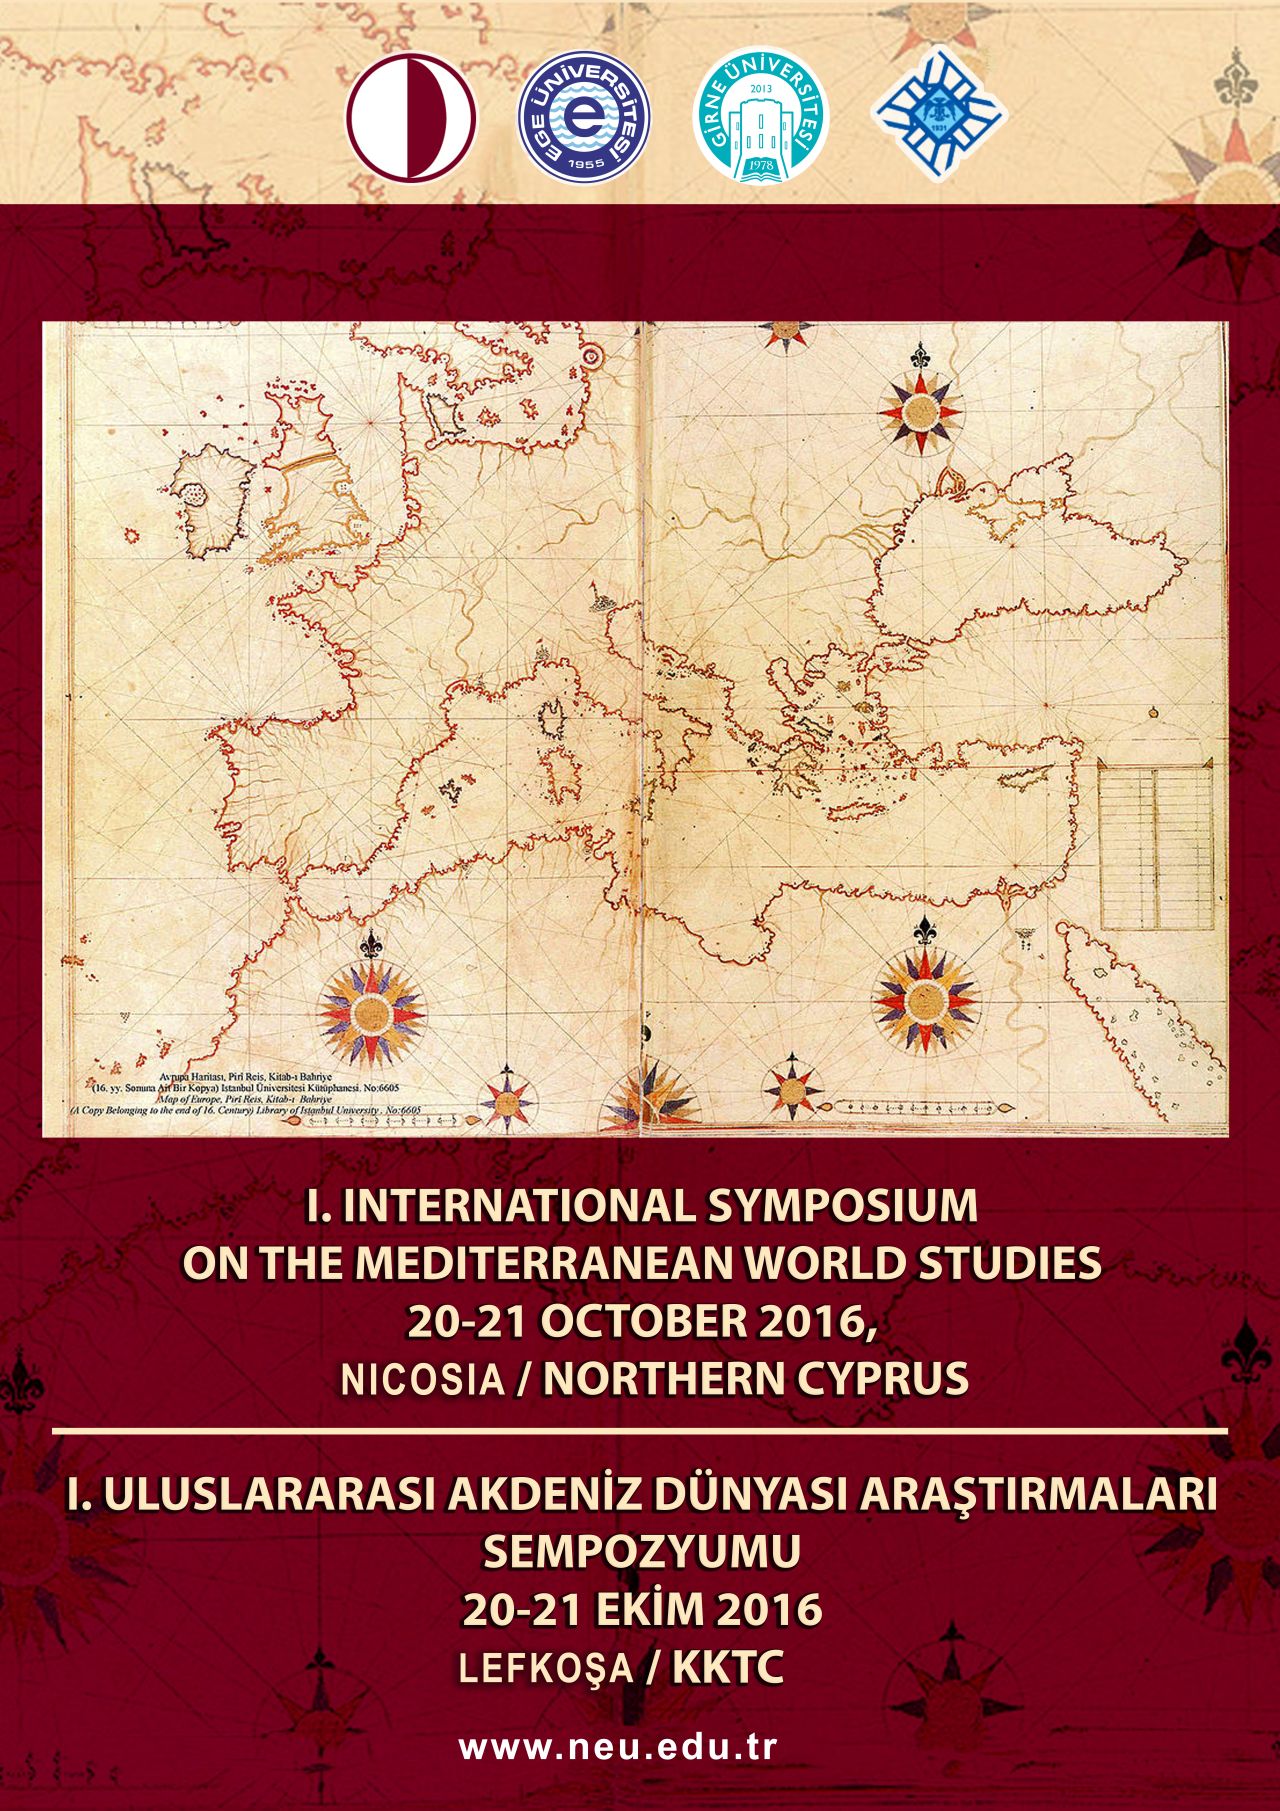 Near East University is hosting the 1st International Symposium on Mediterranean World Studies